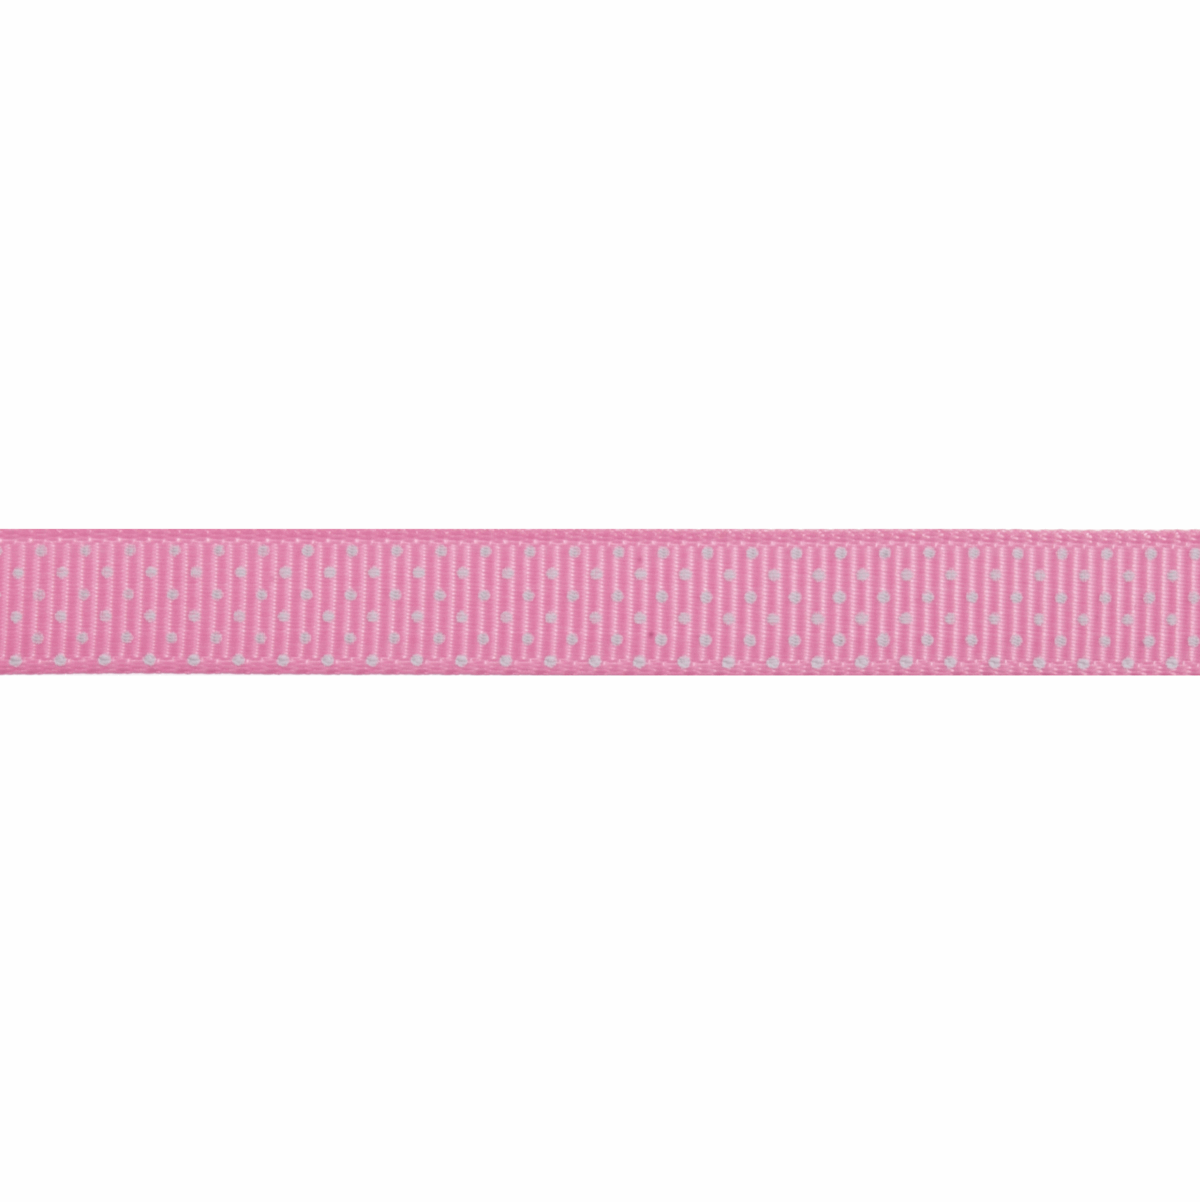 Bowtique Spotty Pink Grosgrain Ribbon - 5m x 10mm Roll